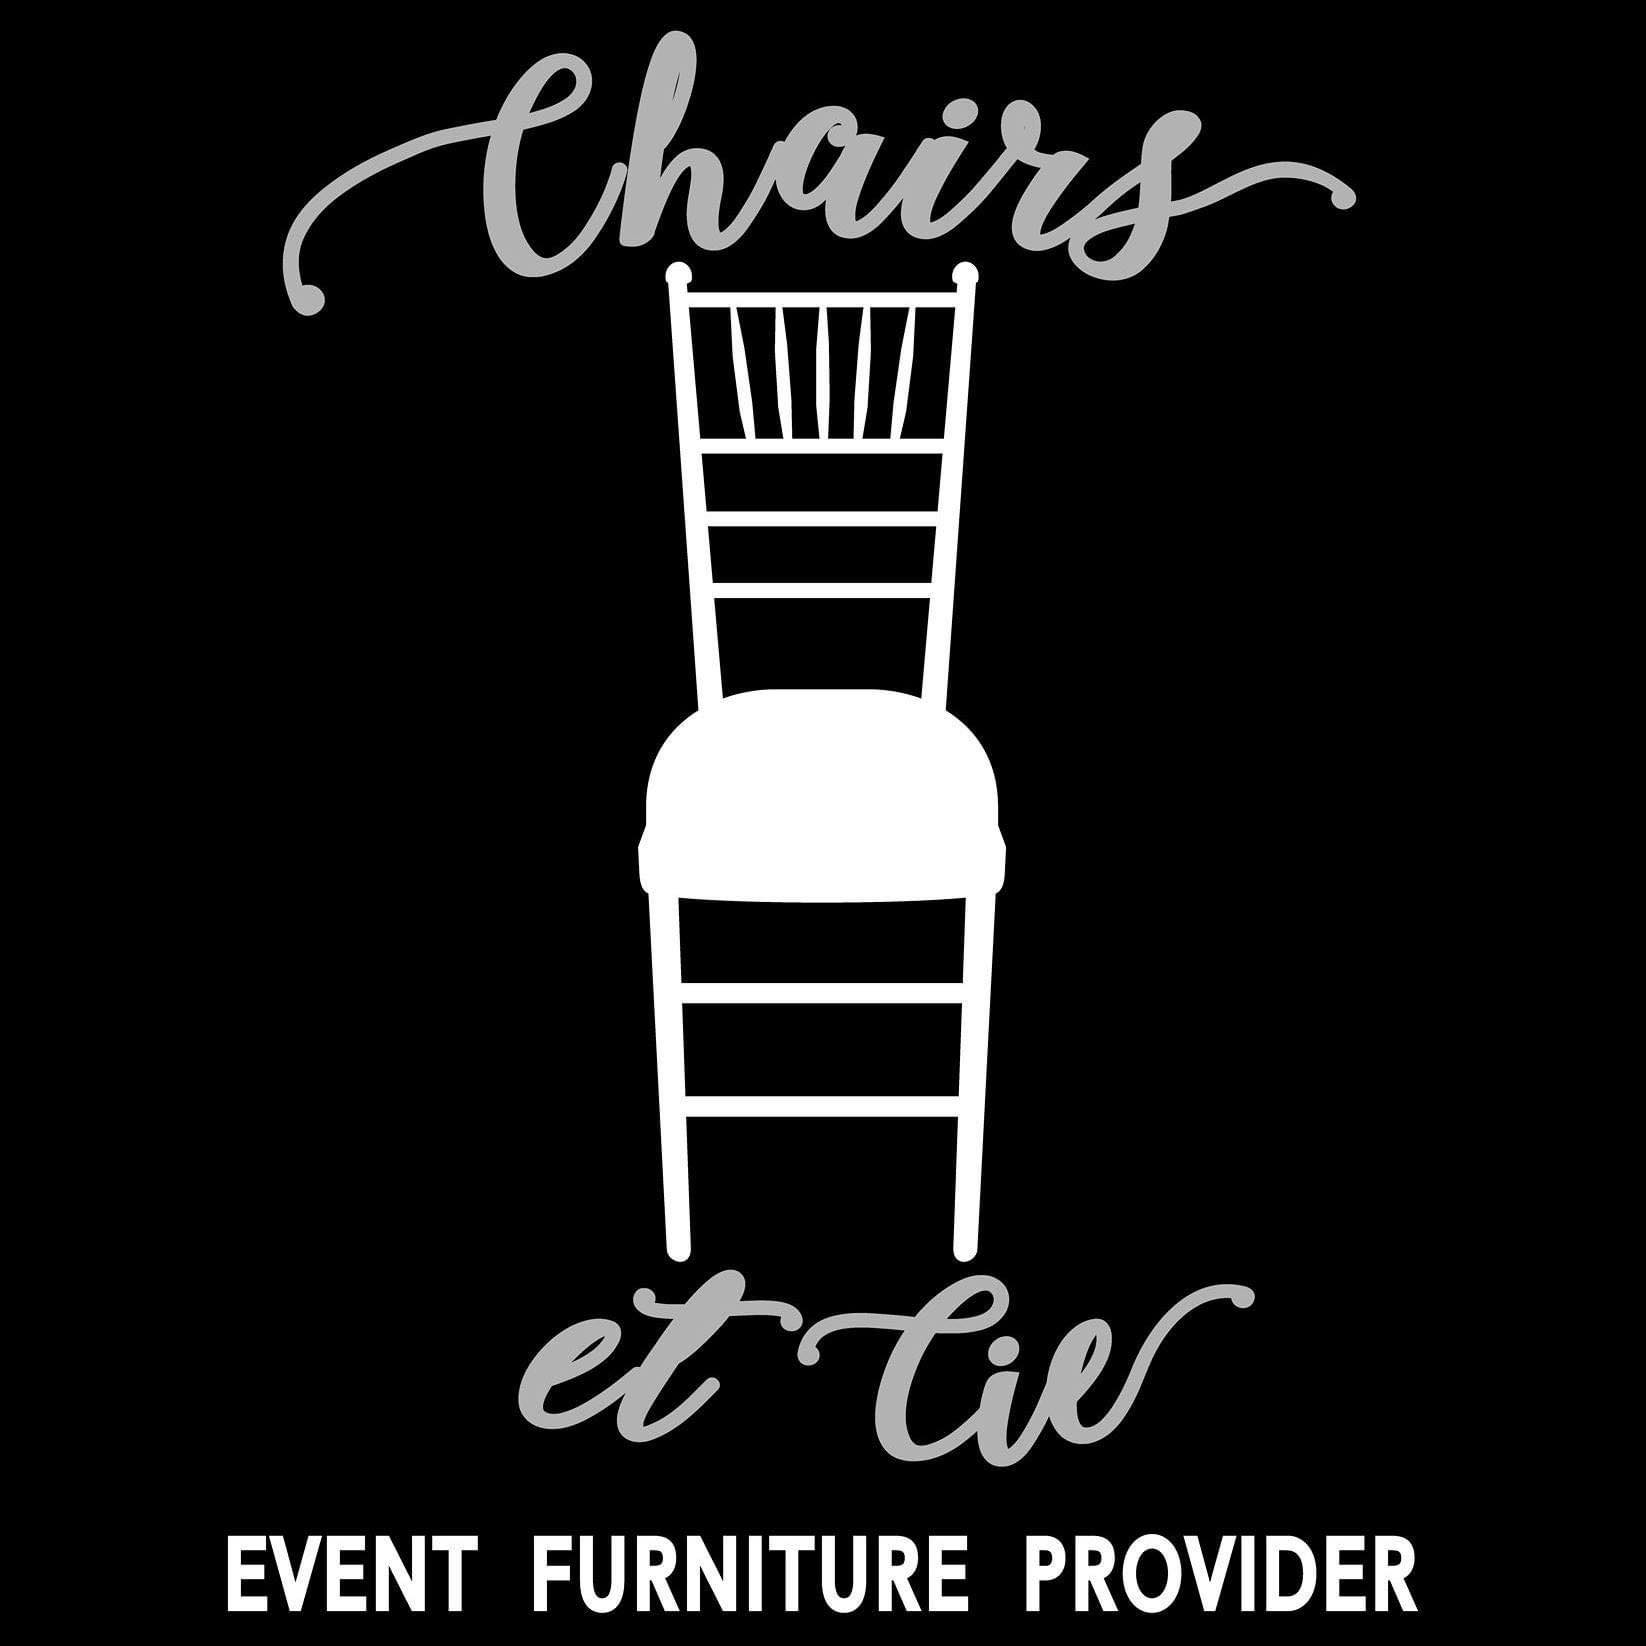 Sponsor Logo - Chairs et Cie